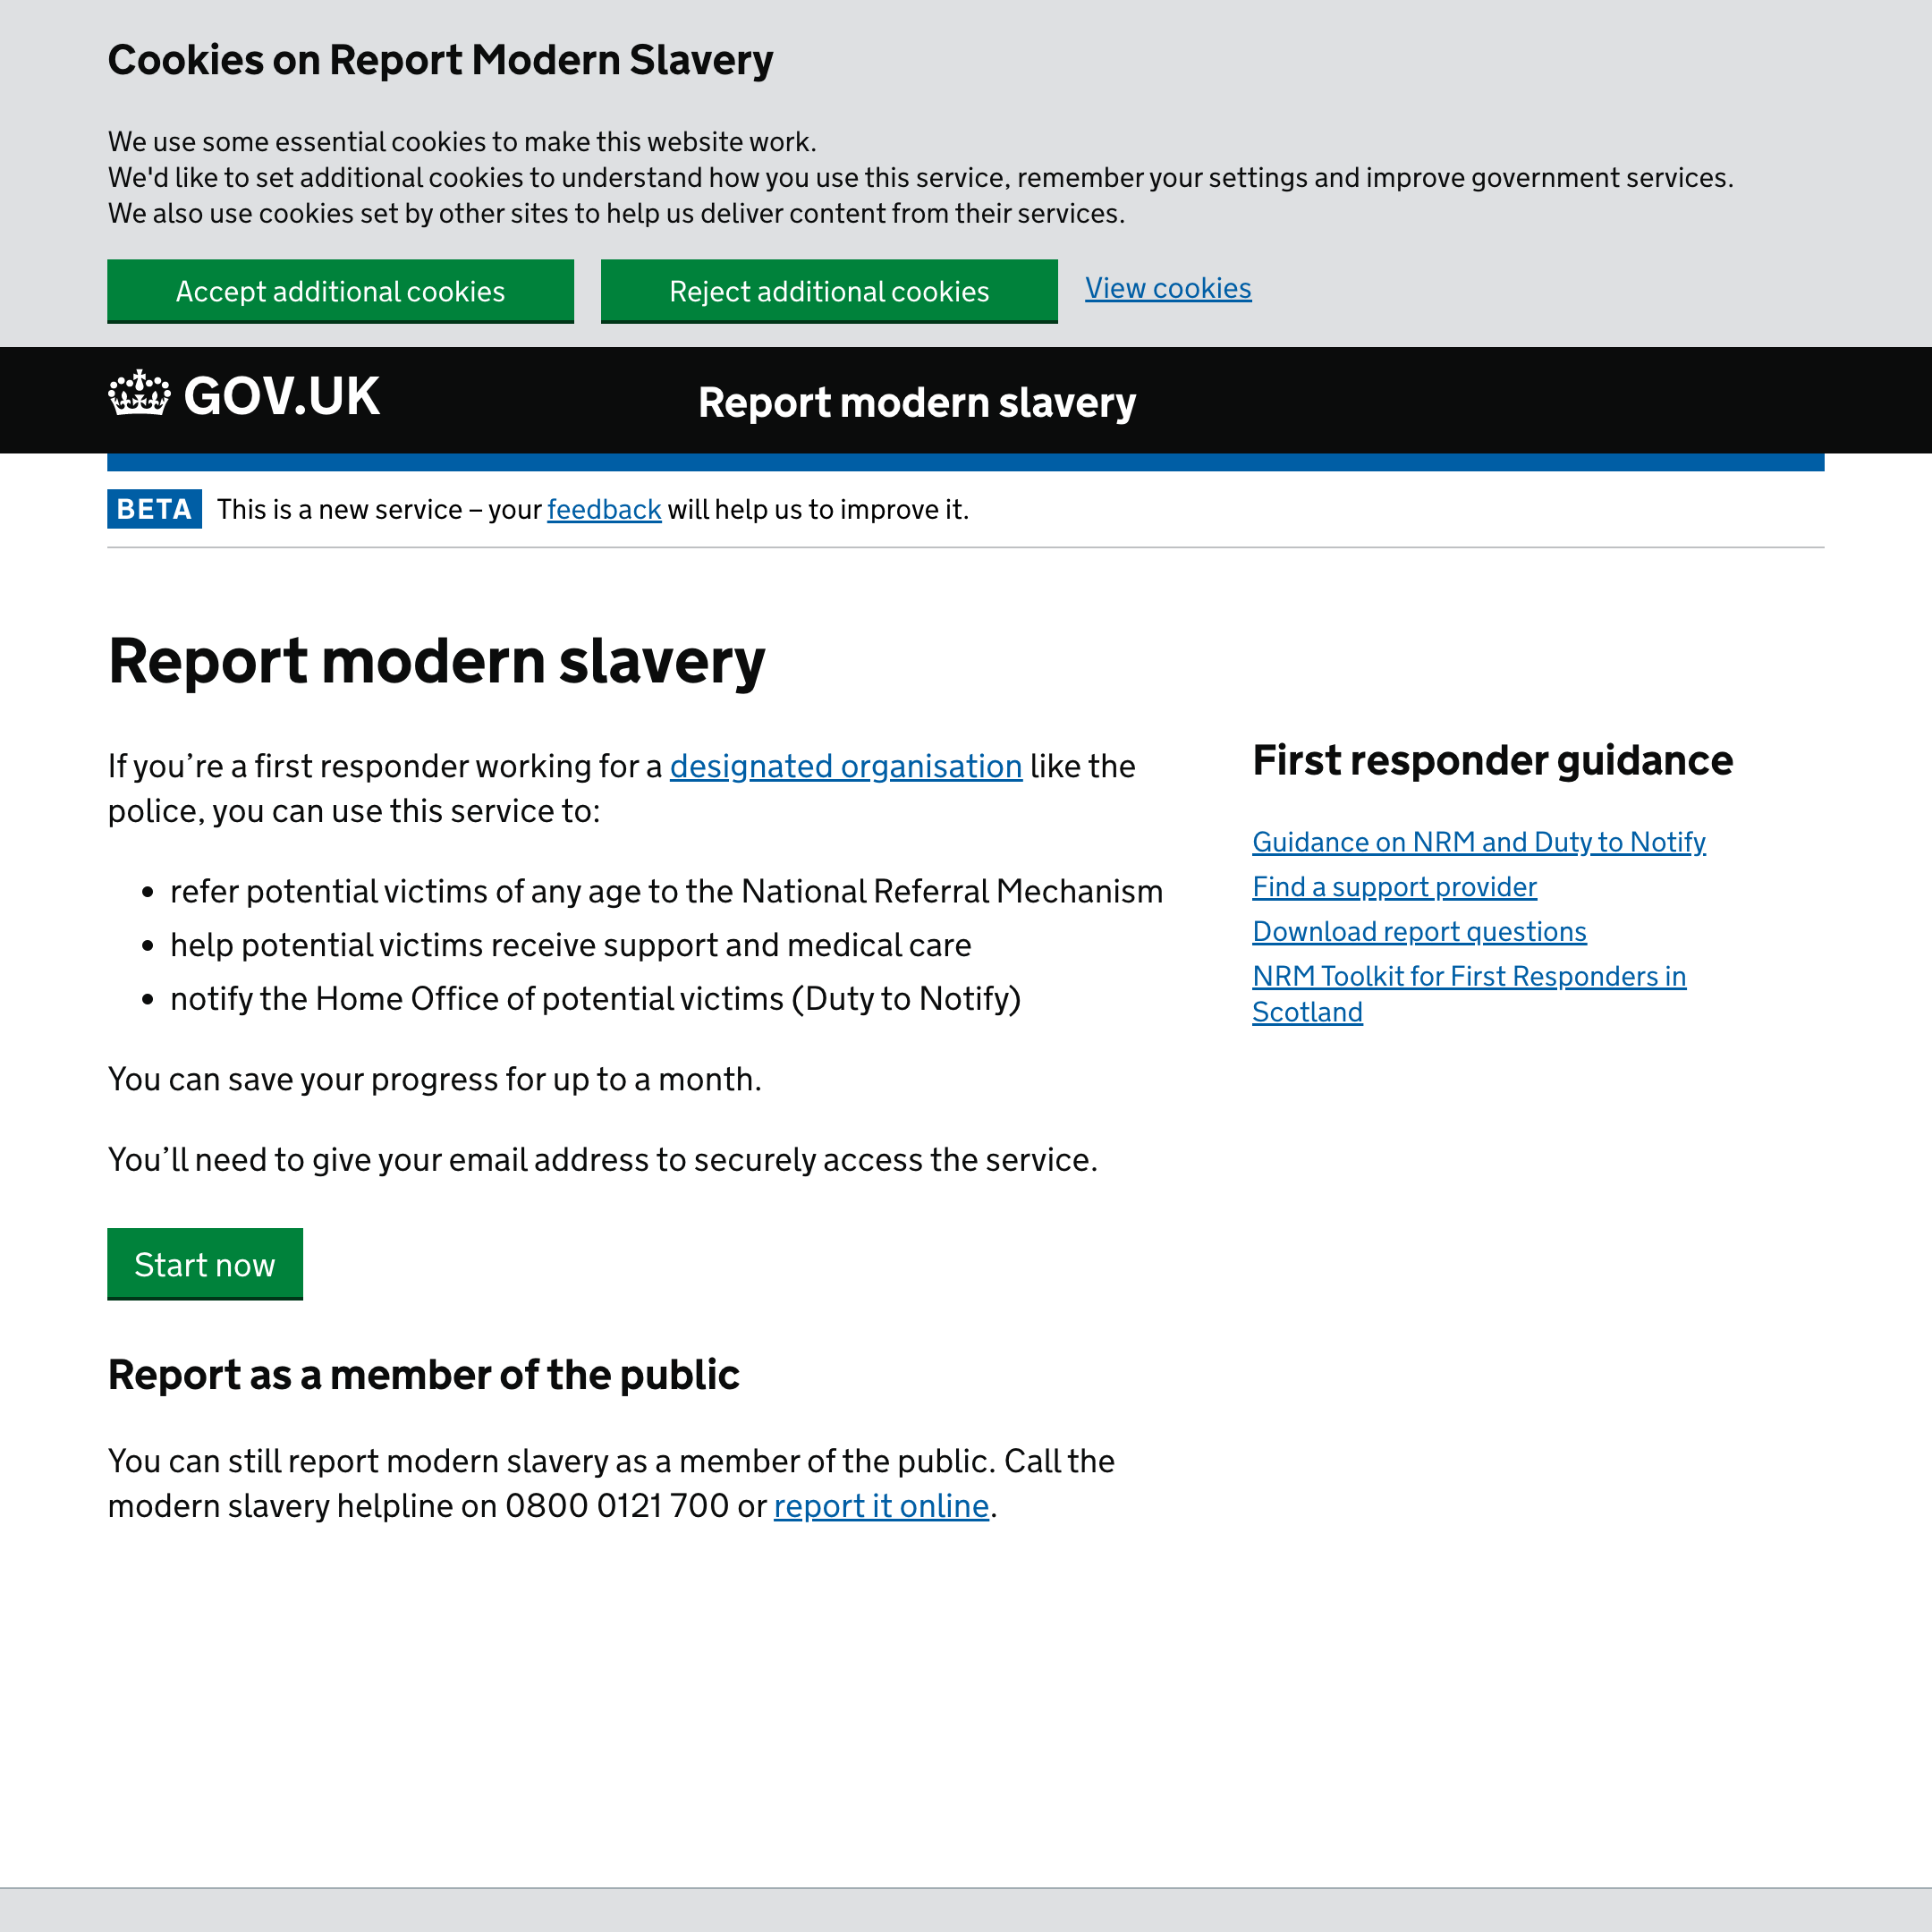 Report modern slavery